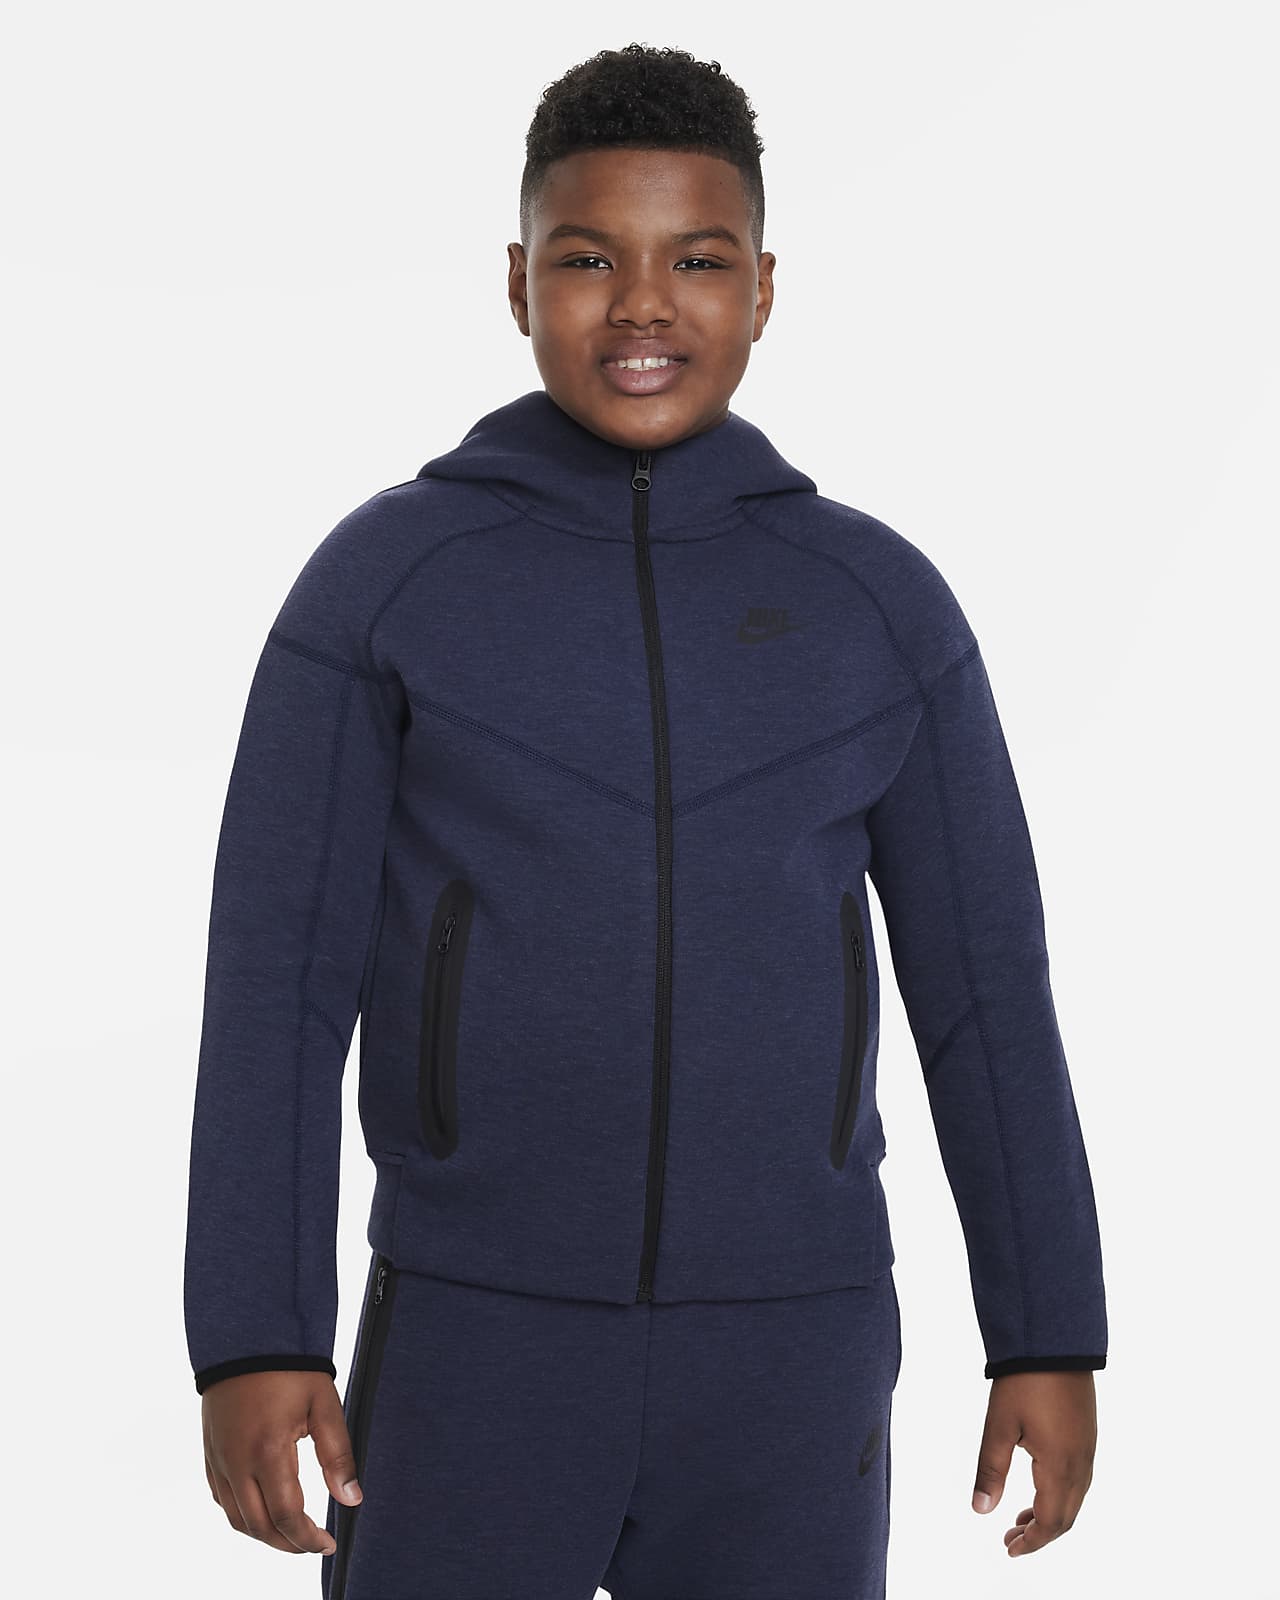 Hoodie com fecho completo Nike Sportswear Tech Fleece Júnior (Rapaz) (tamanhos grandes)